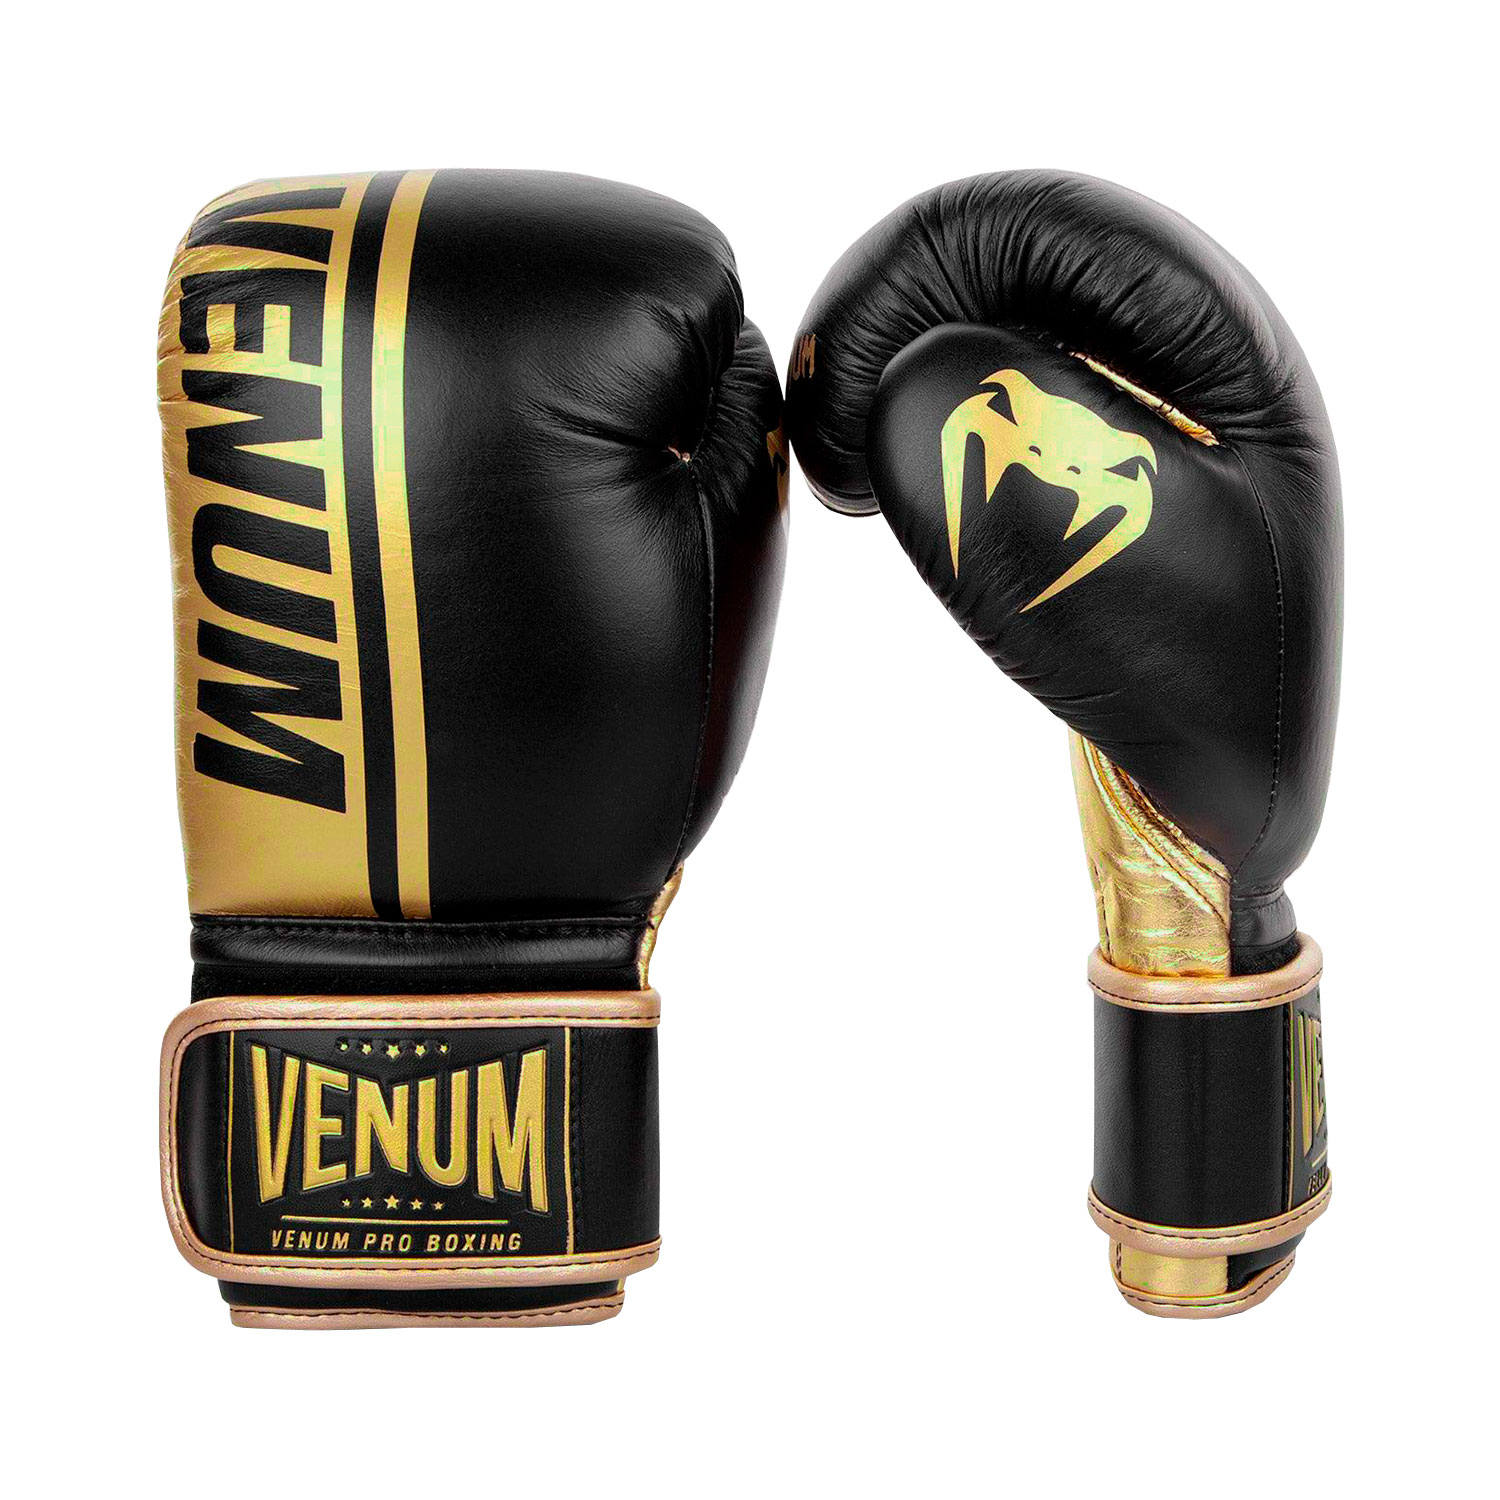 Боксерские перчатки Venum 